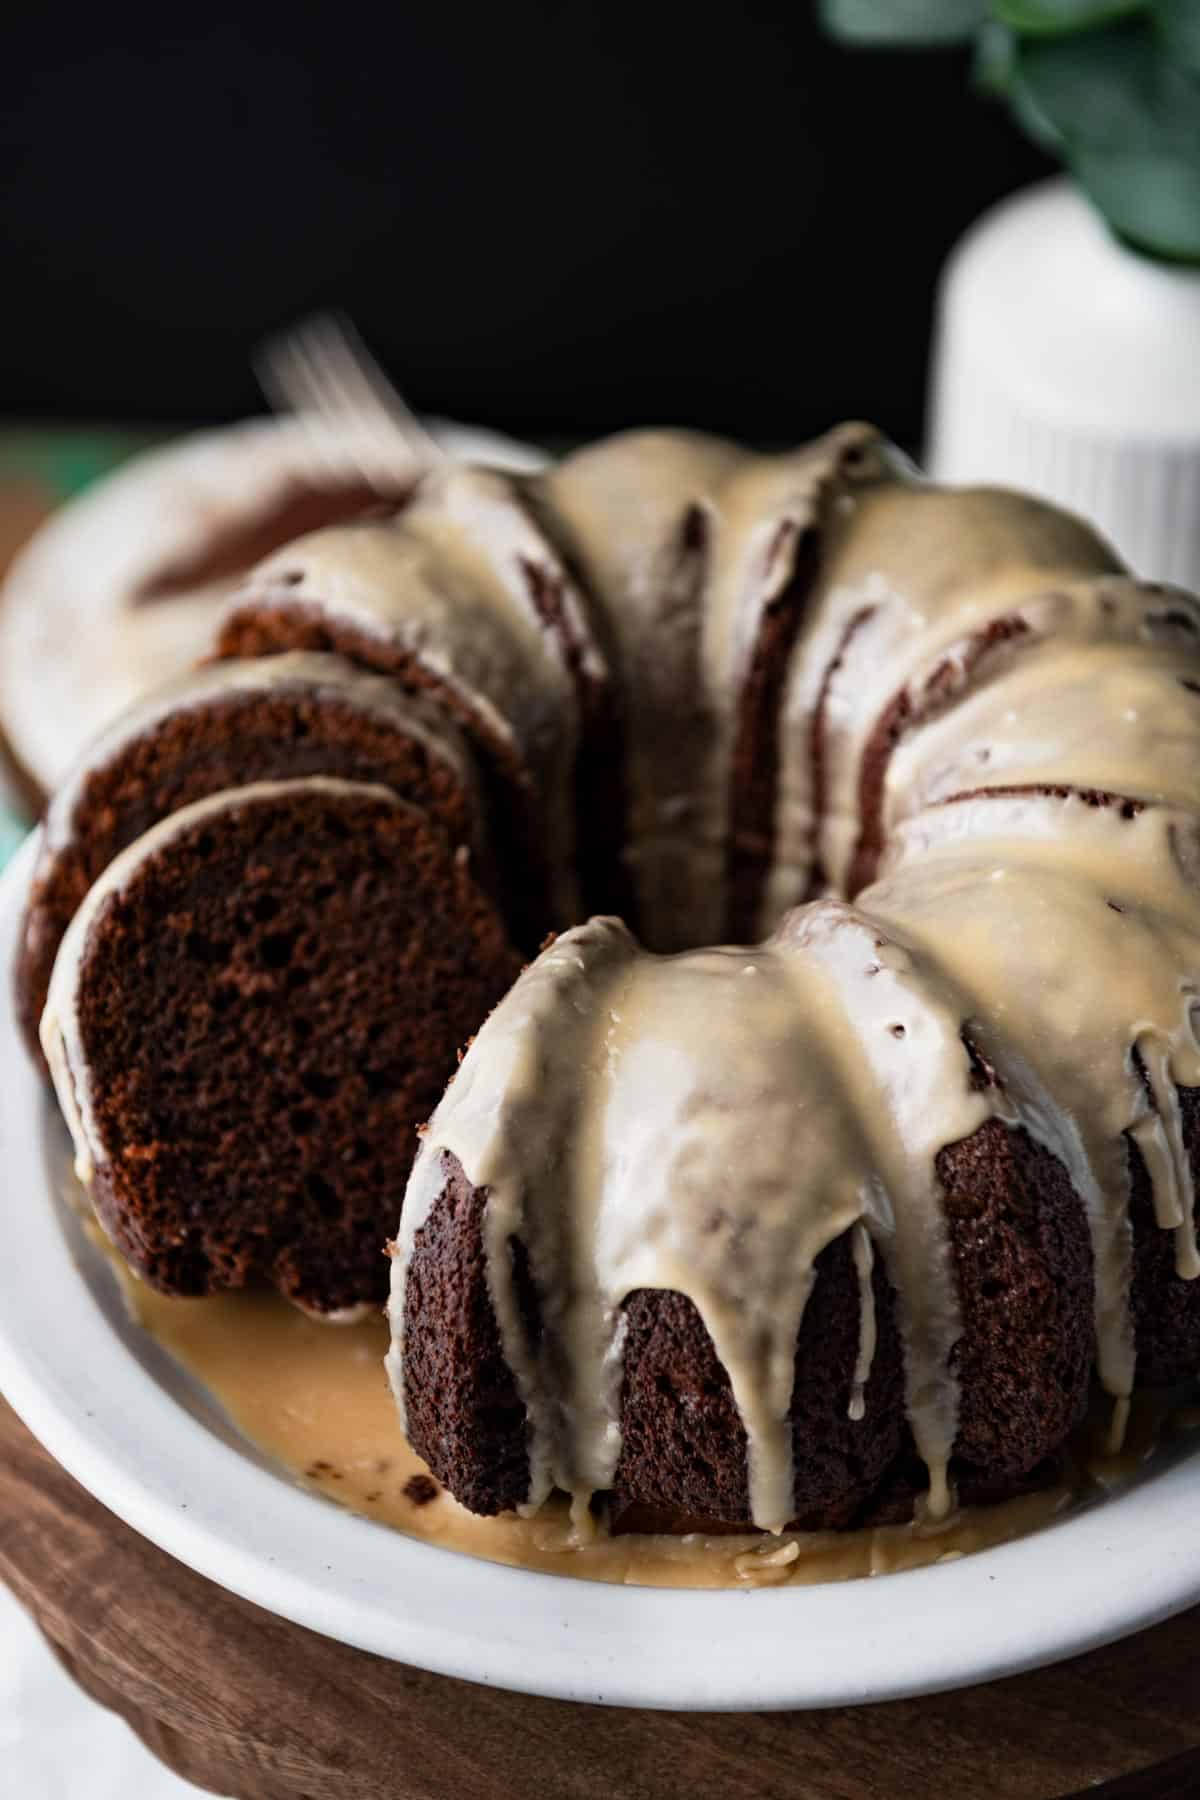 Chocolate bundt cake made with Guinness and an Irish whiskey glaze.